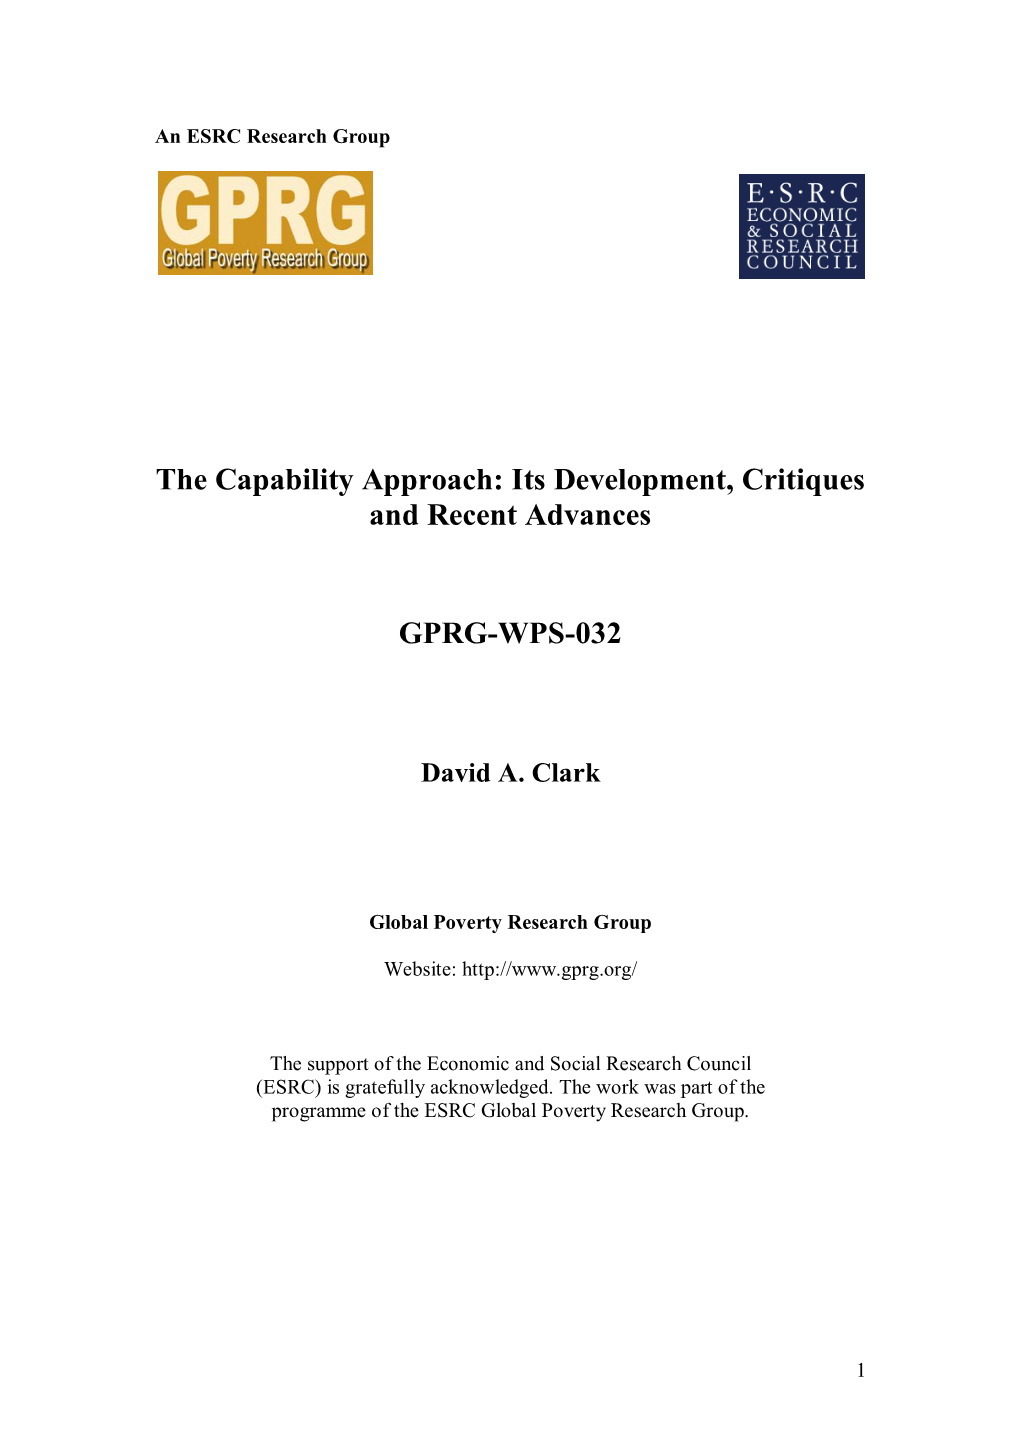 The Capability Approach: Its Development, Critiques and Recent Advances